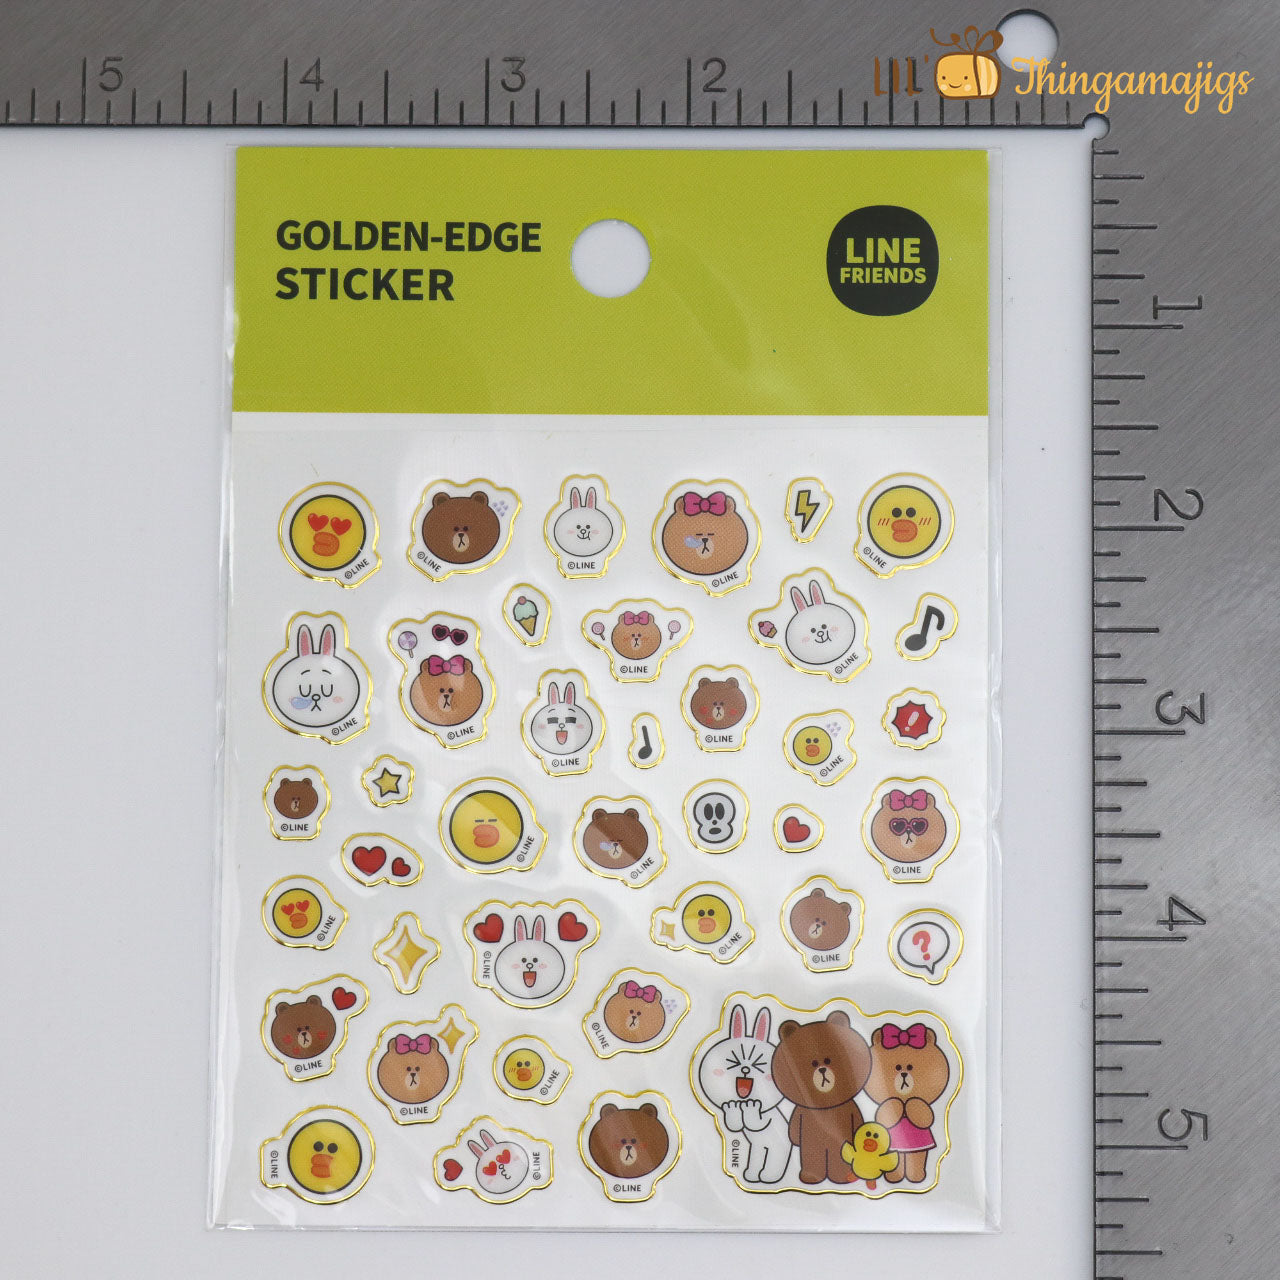 Line Friends Golden-Edge Sticker